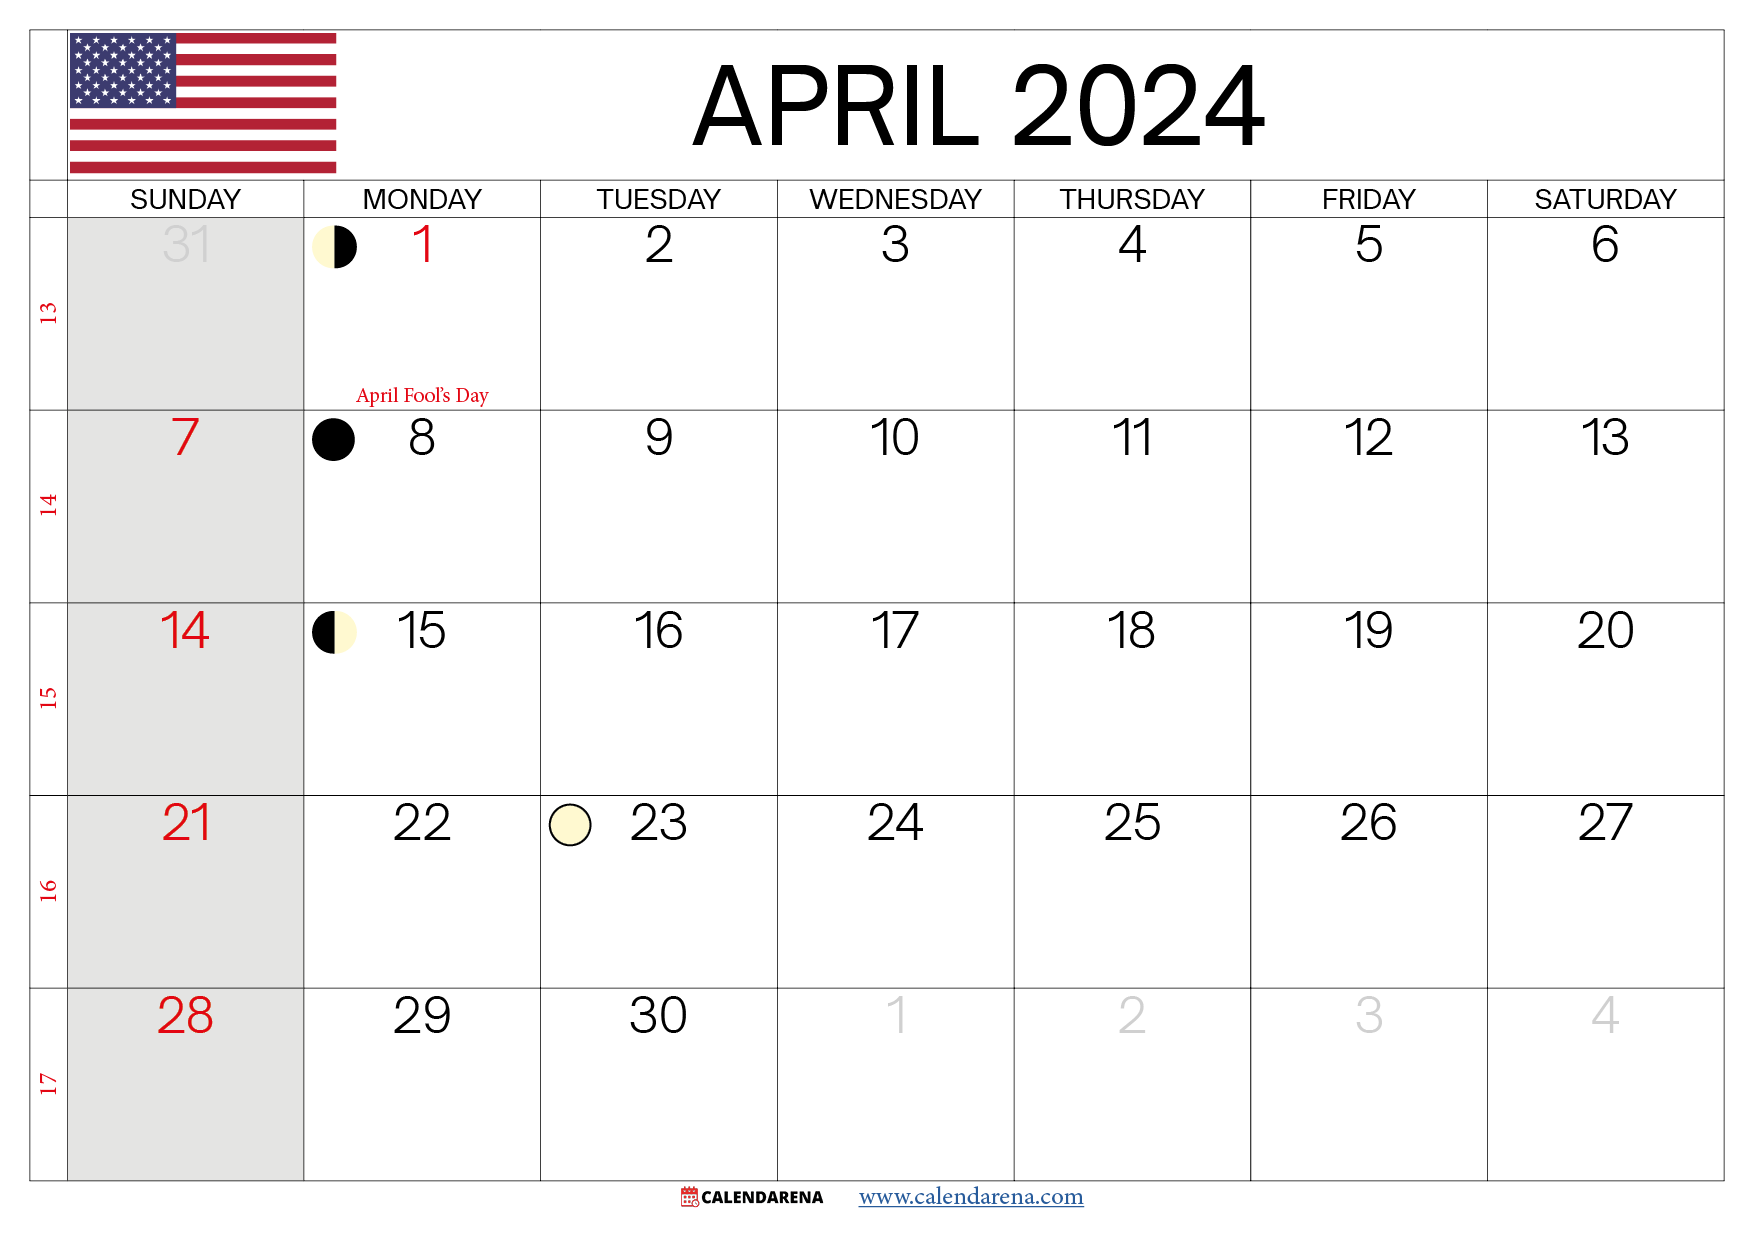 april 2024 calendar with holidays USA